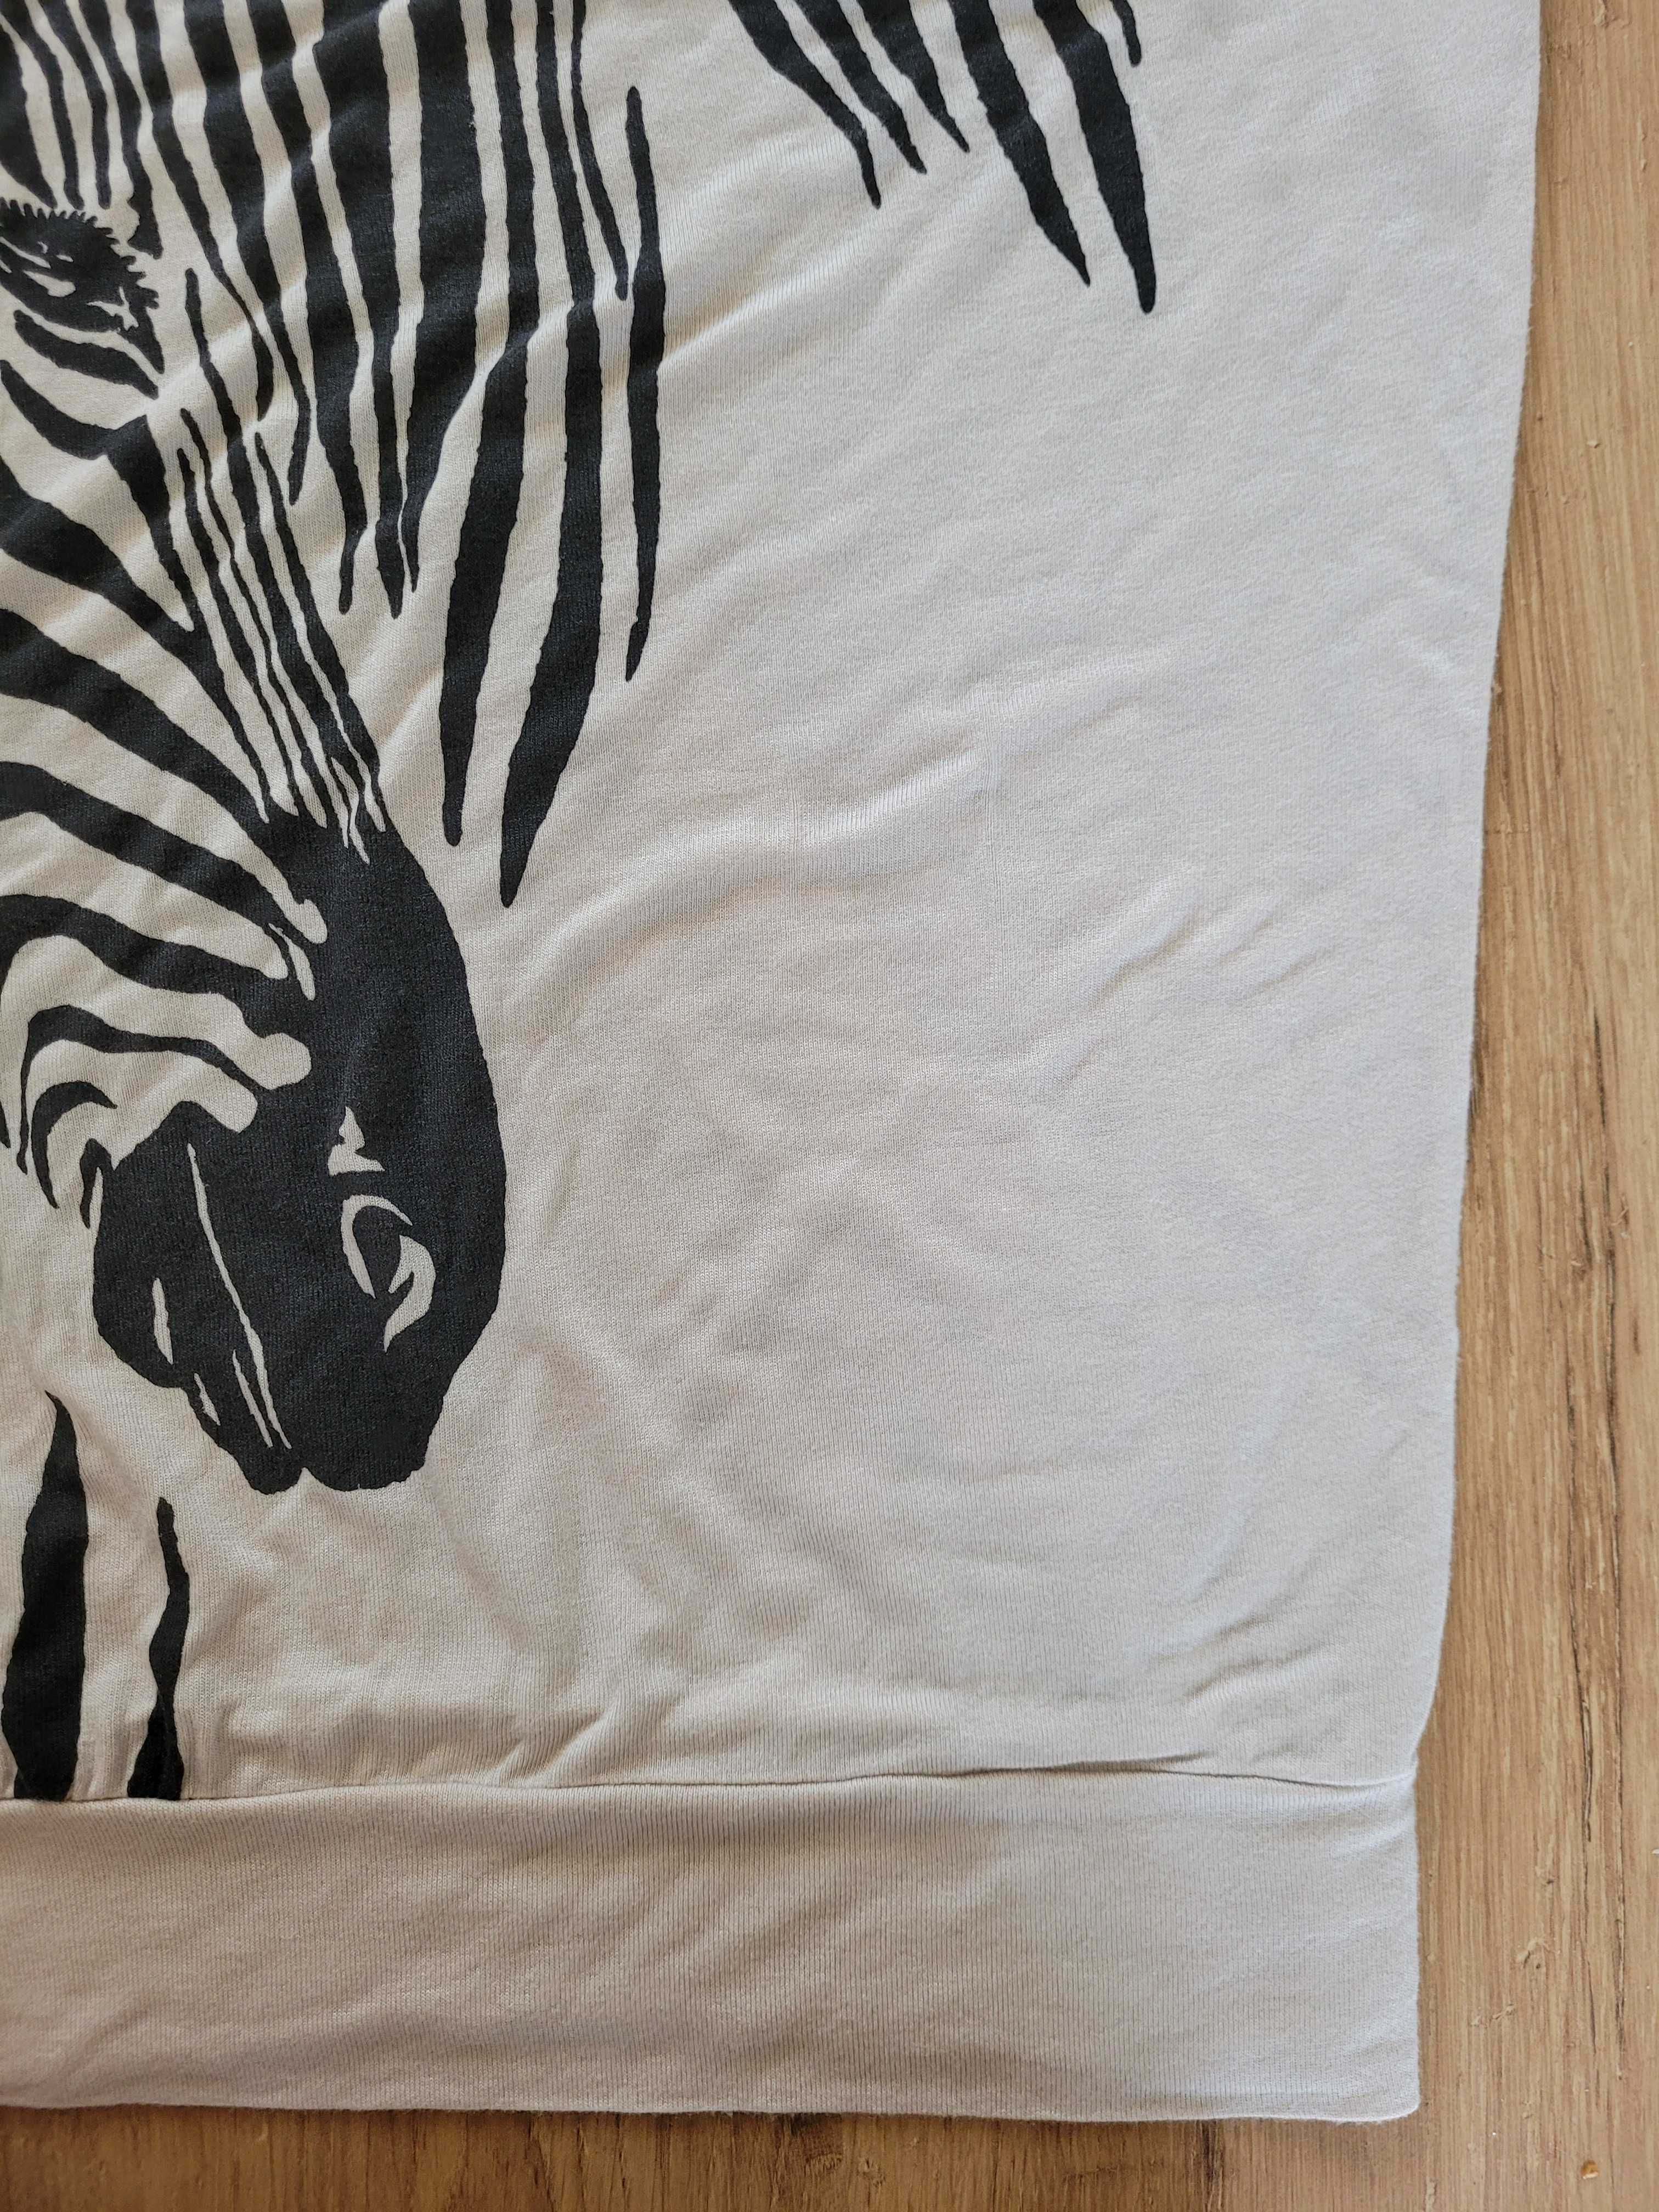 Bluzka damska S 36 Bershka beżowa dekolt ze skosa zebra beżowa